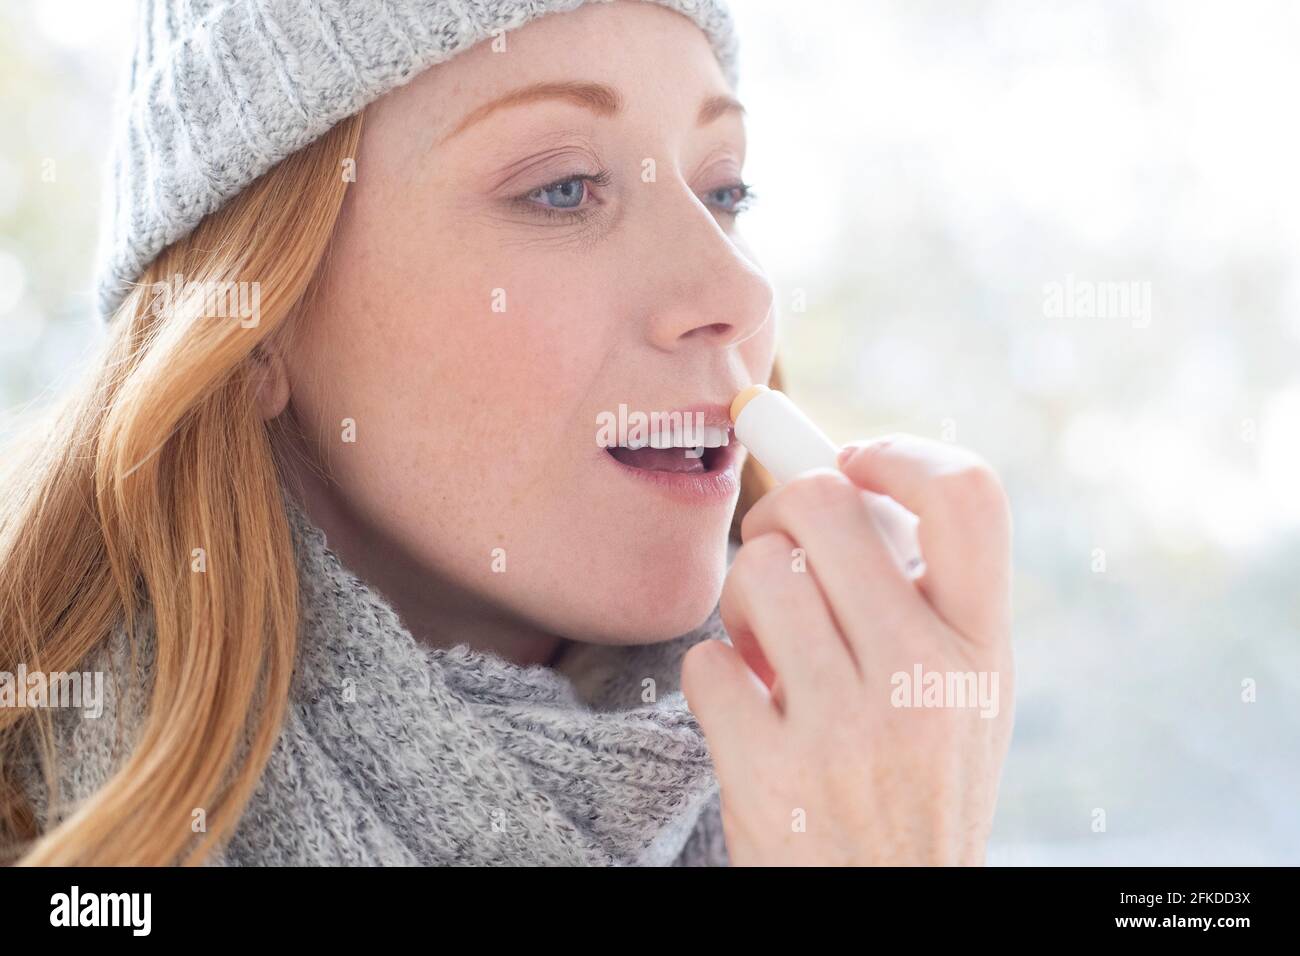 Woman applying lip balm Stock Photo